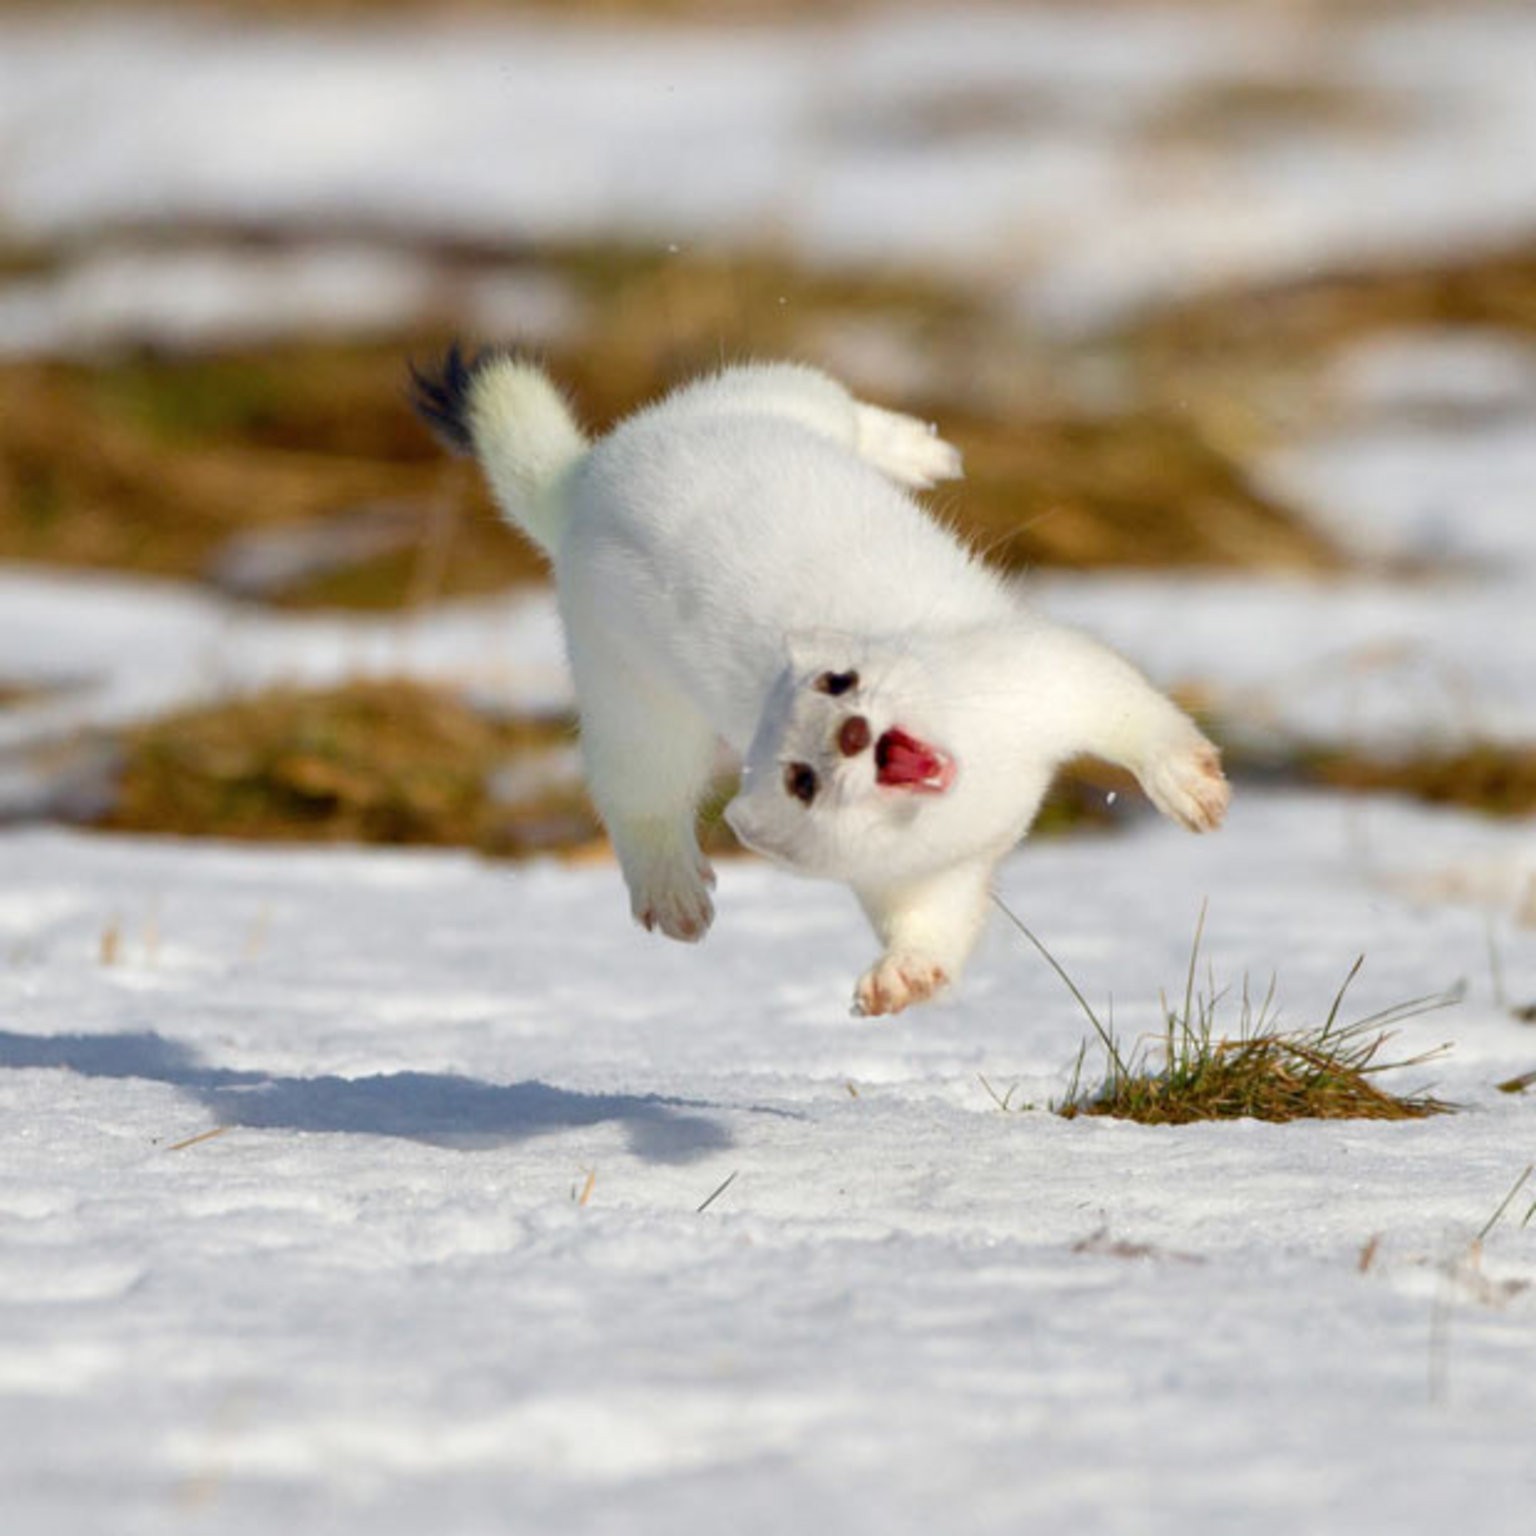 Snow white ferret